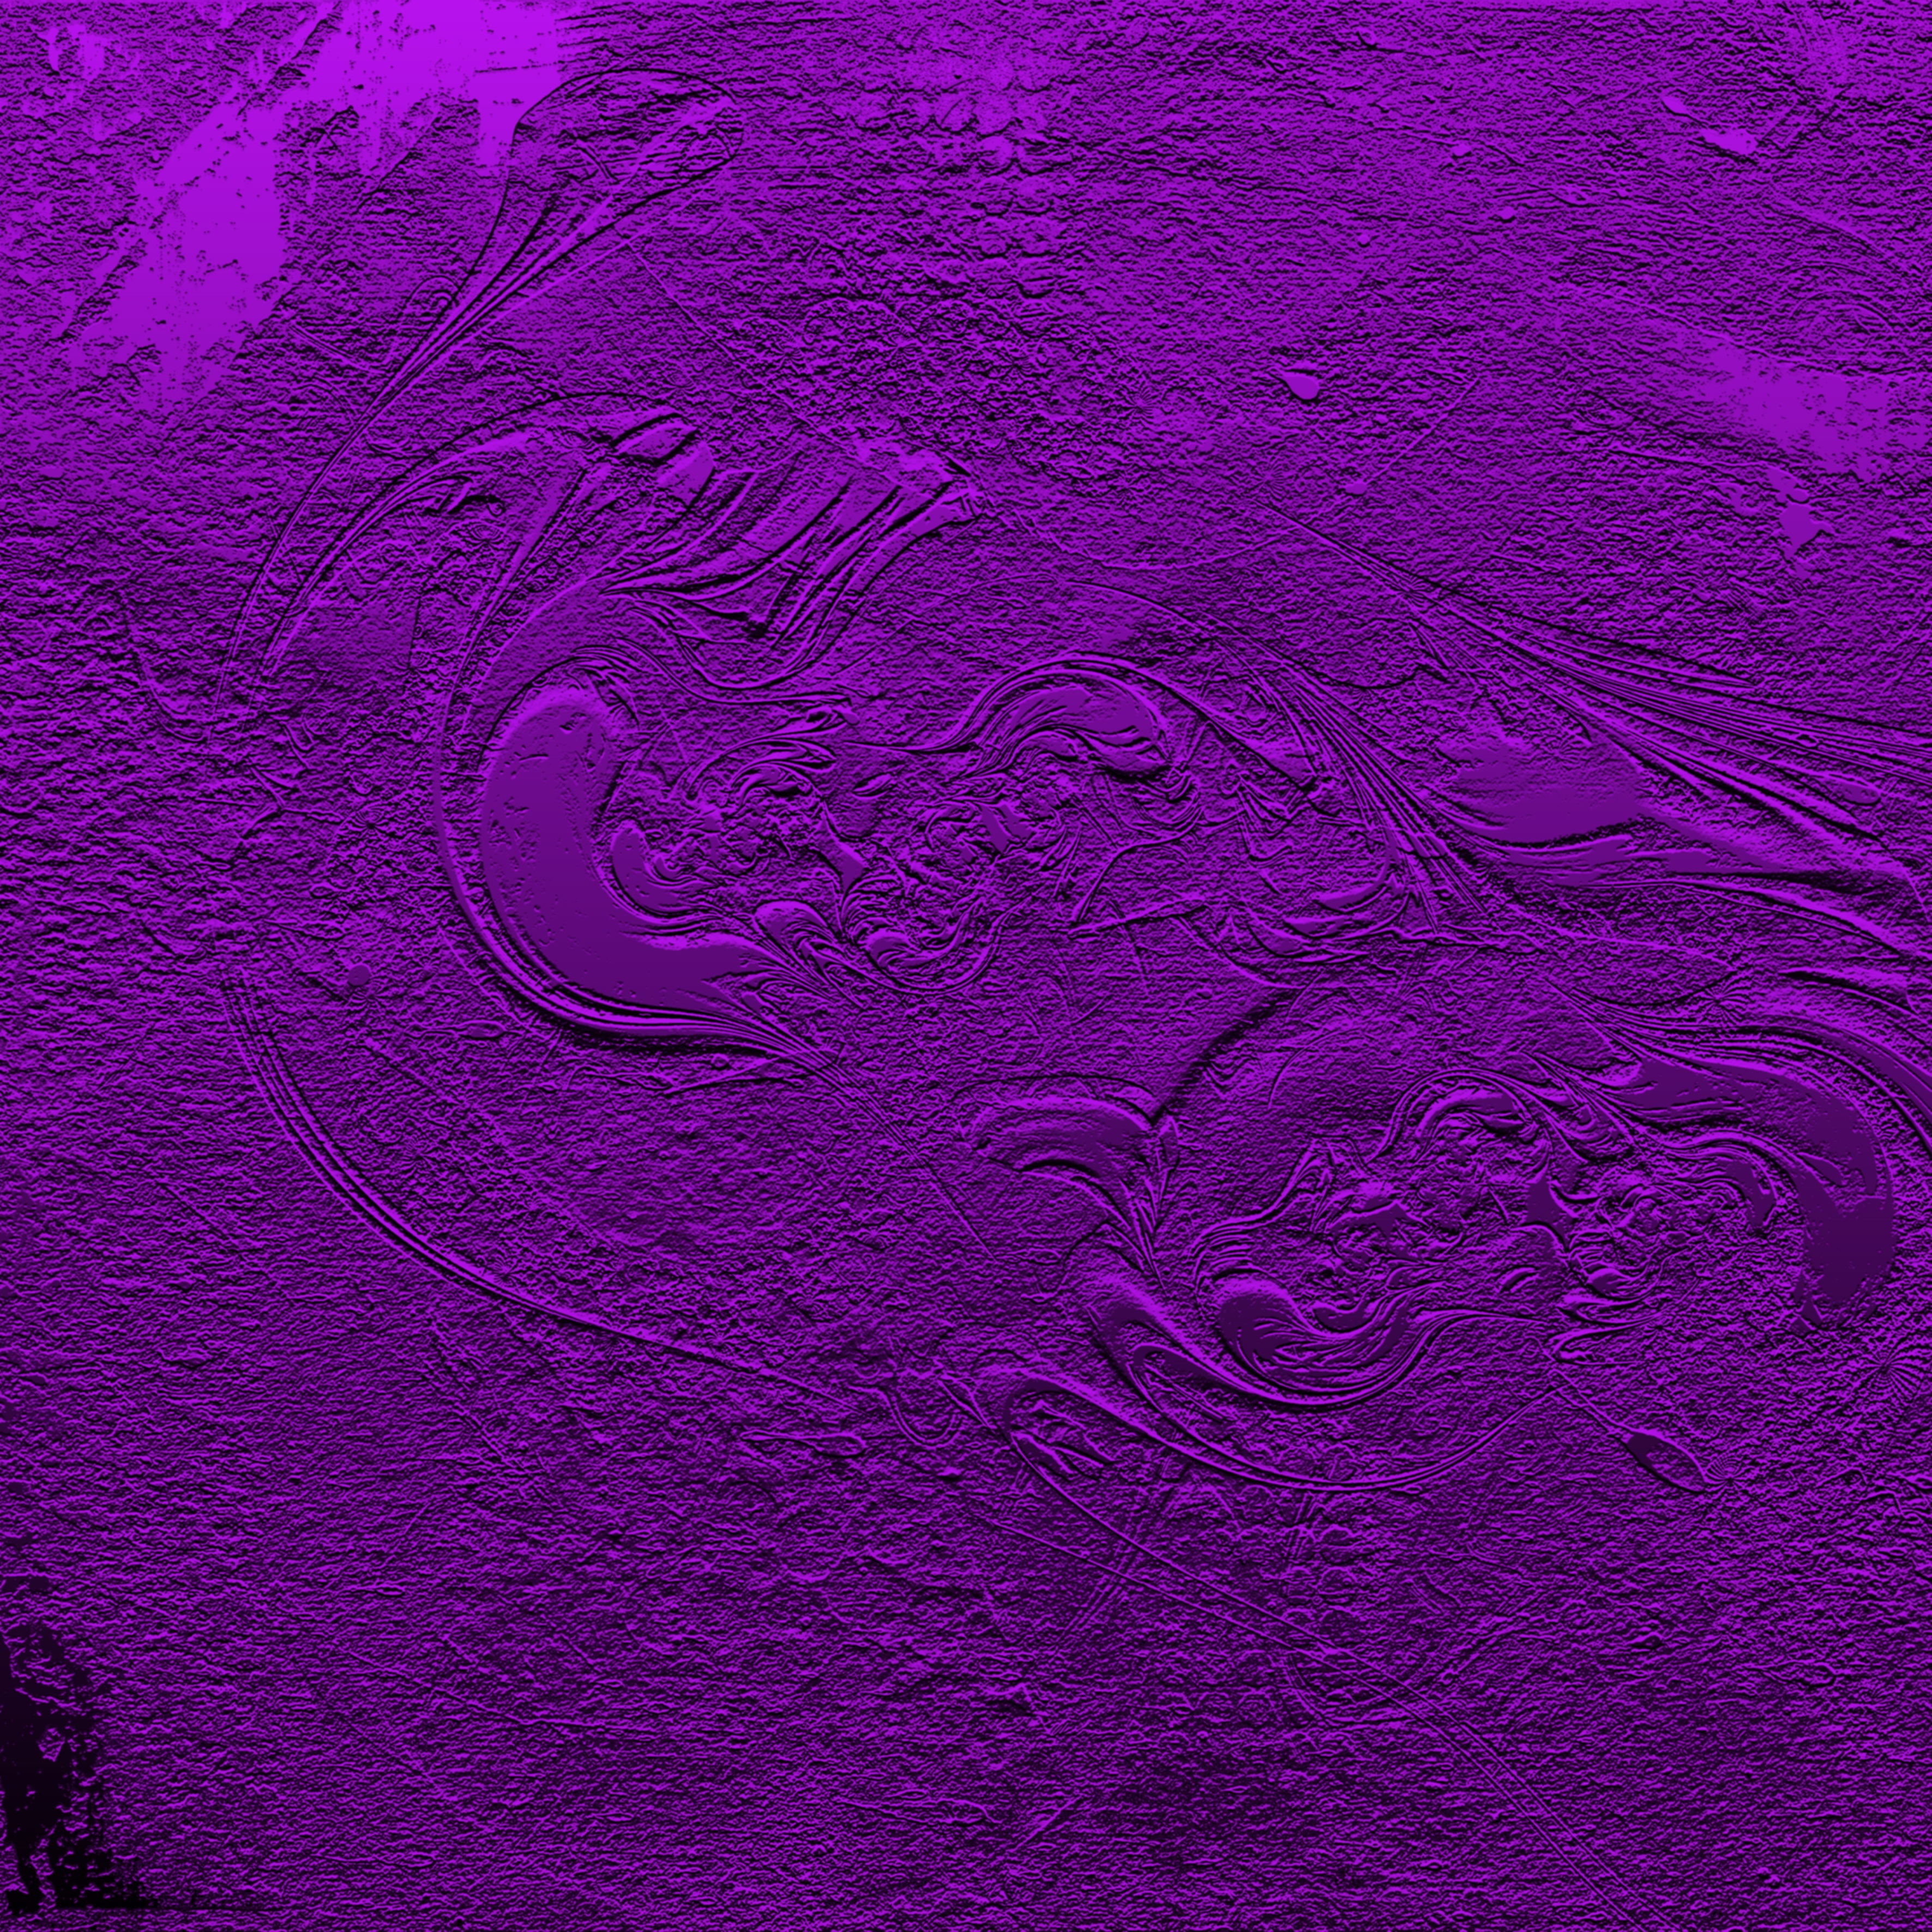 purple, textures, violet, patterns, texture, irregularities